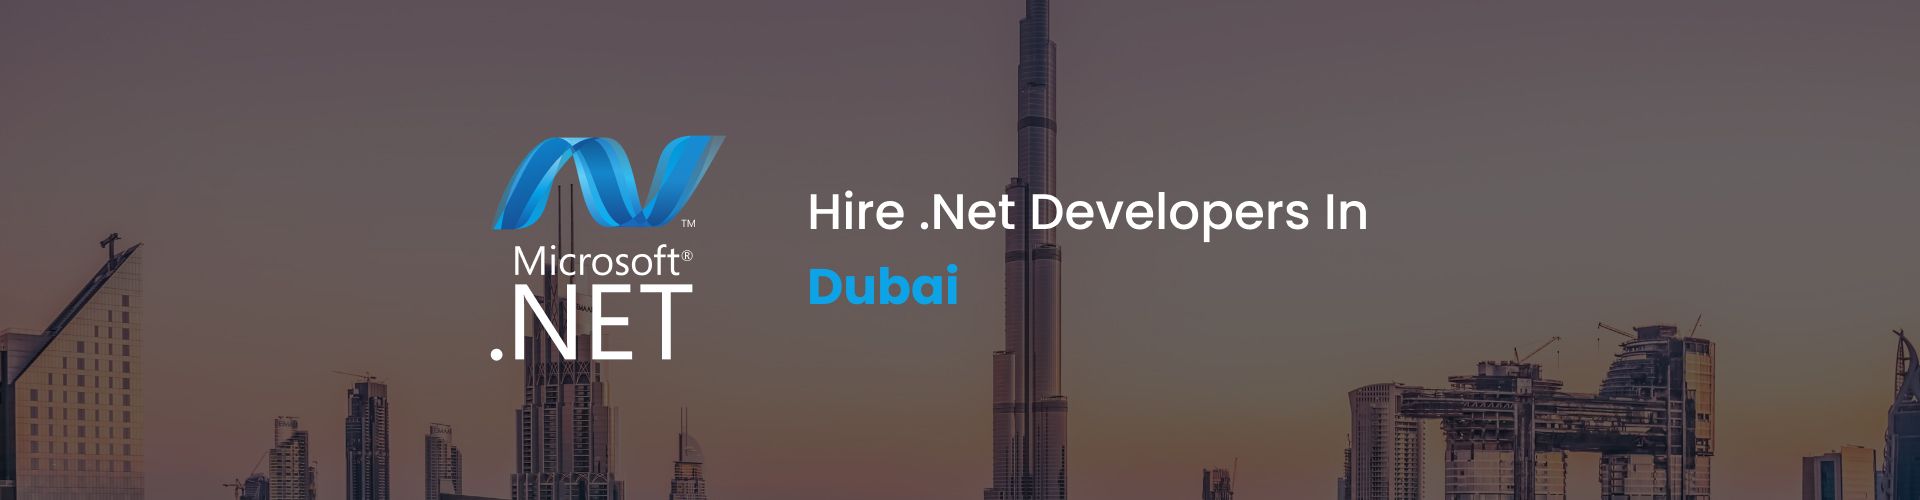 hire .net developers in dubai